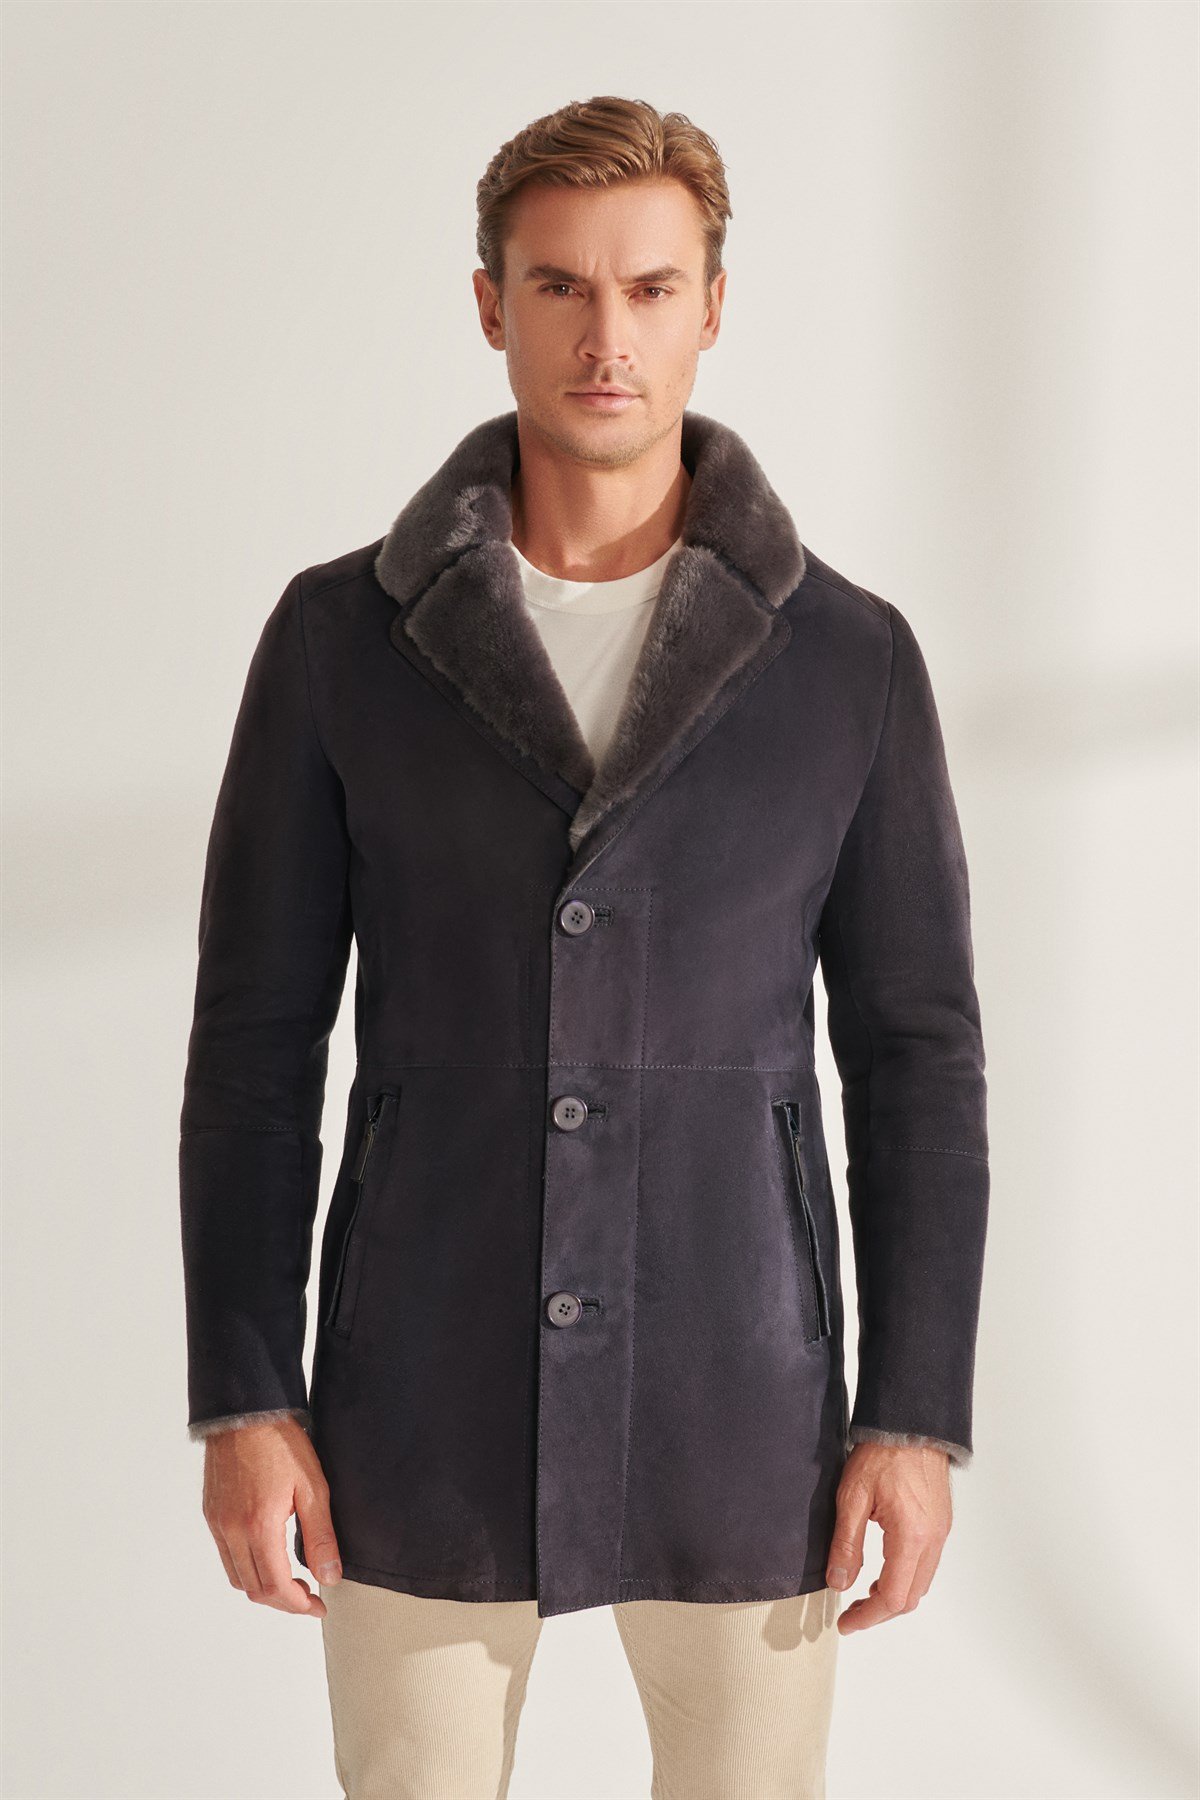 EDGAR Men's Navy Blue Sport Shearling Leather Jacket | Men's Fur ...